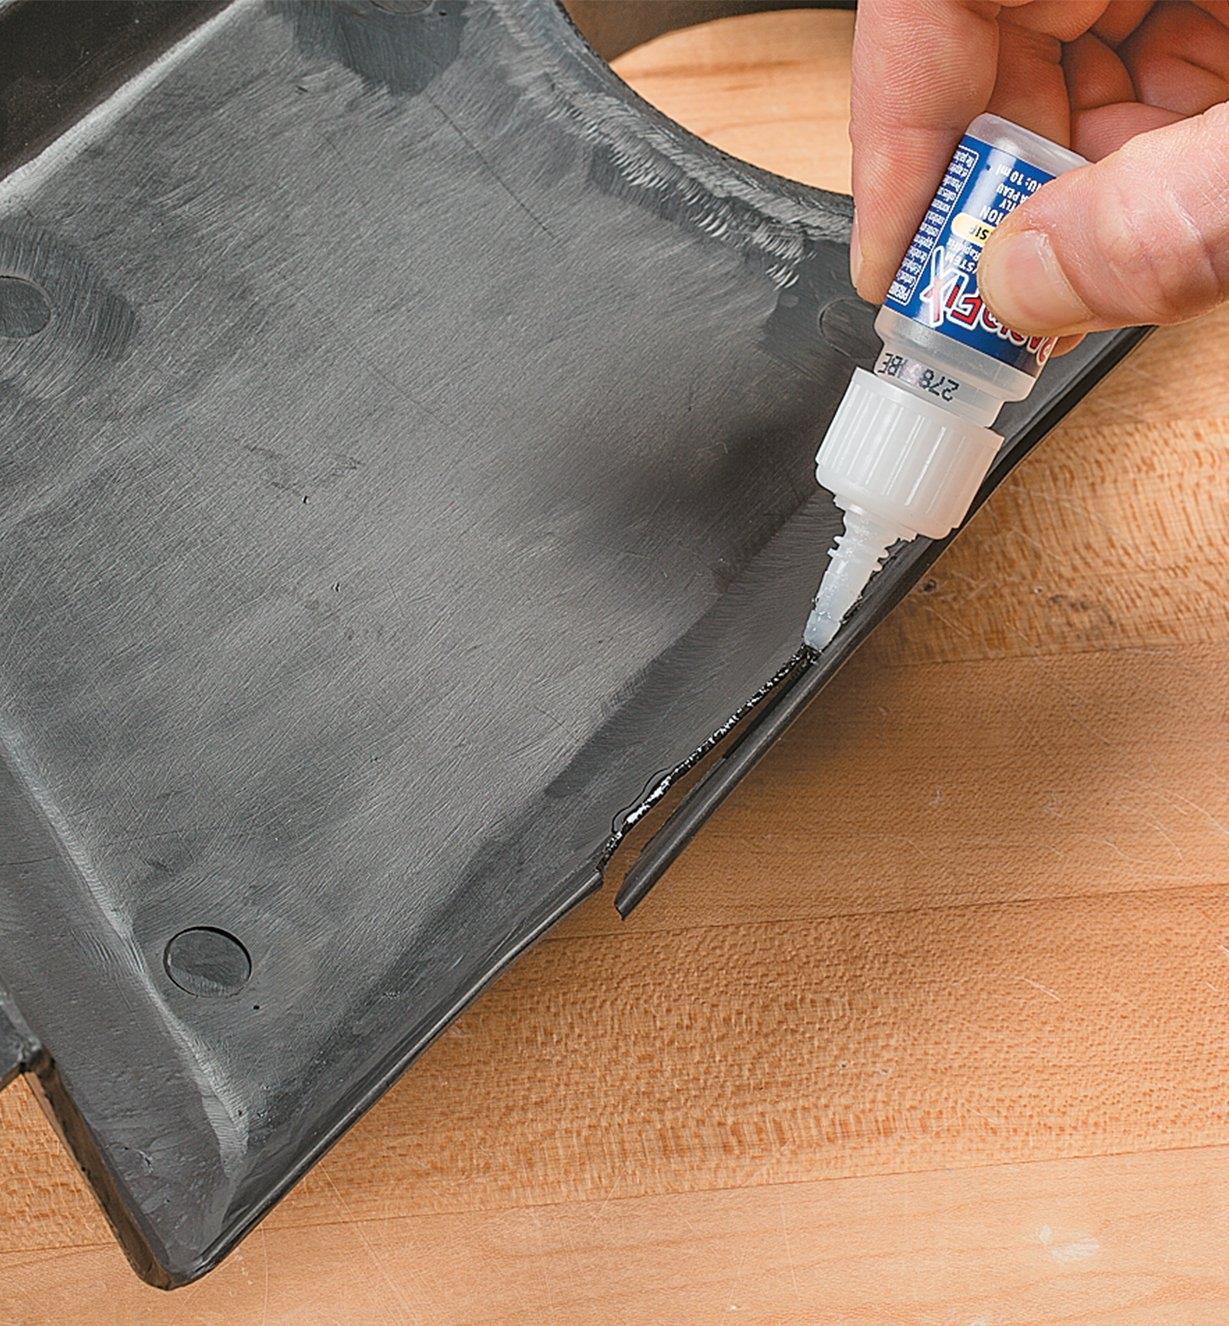 Applying glue to a broken plastic item